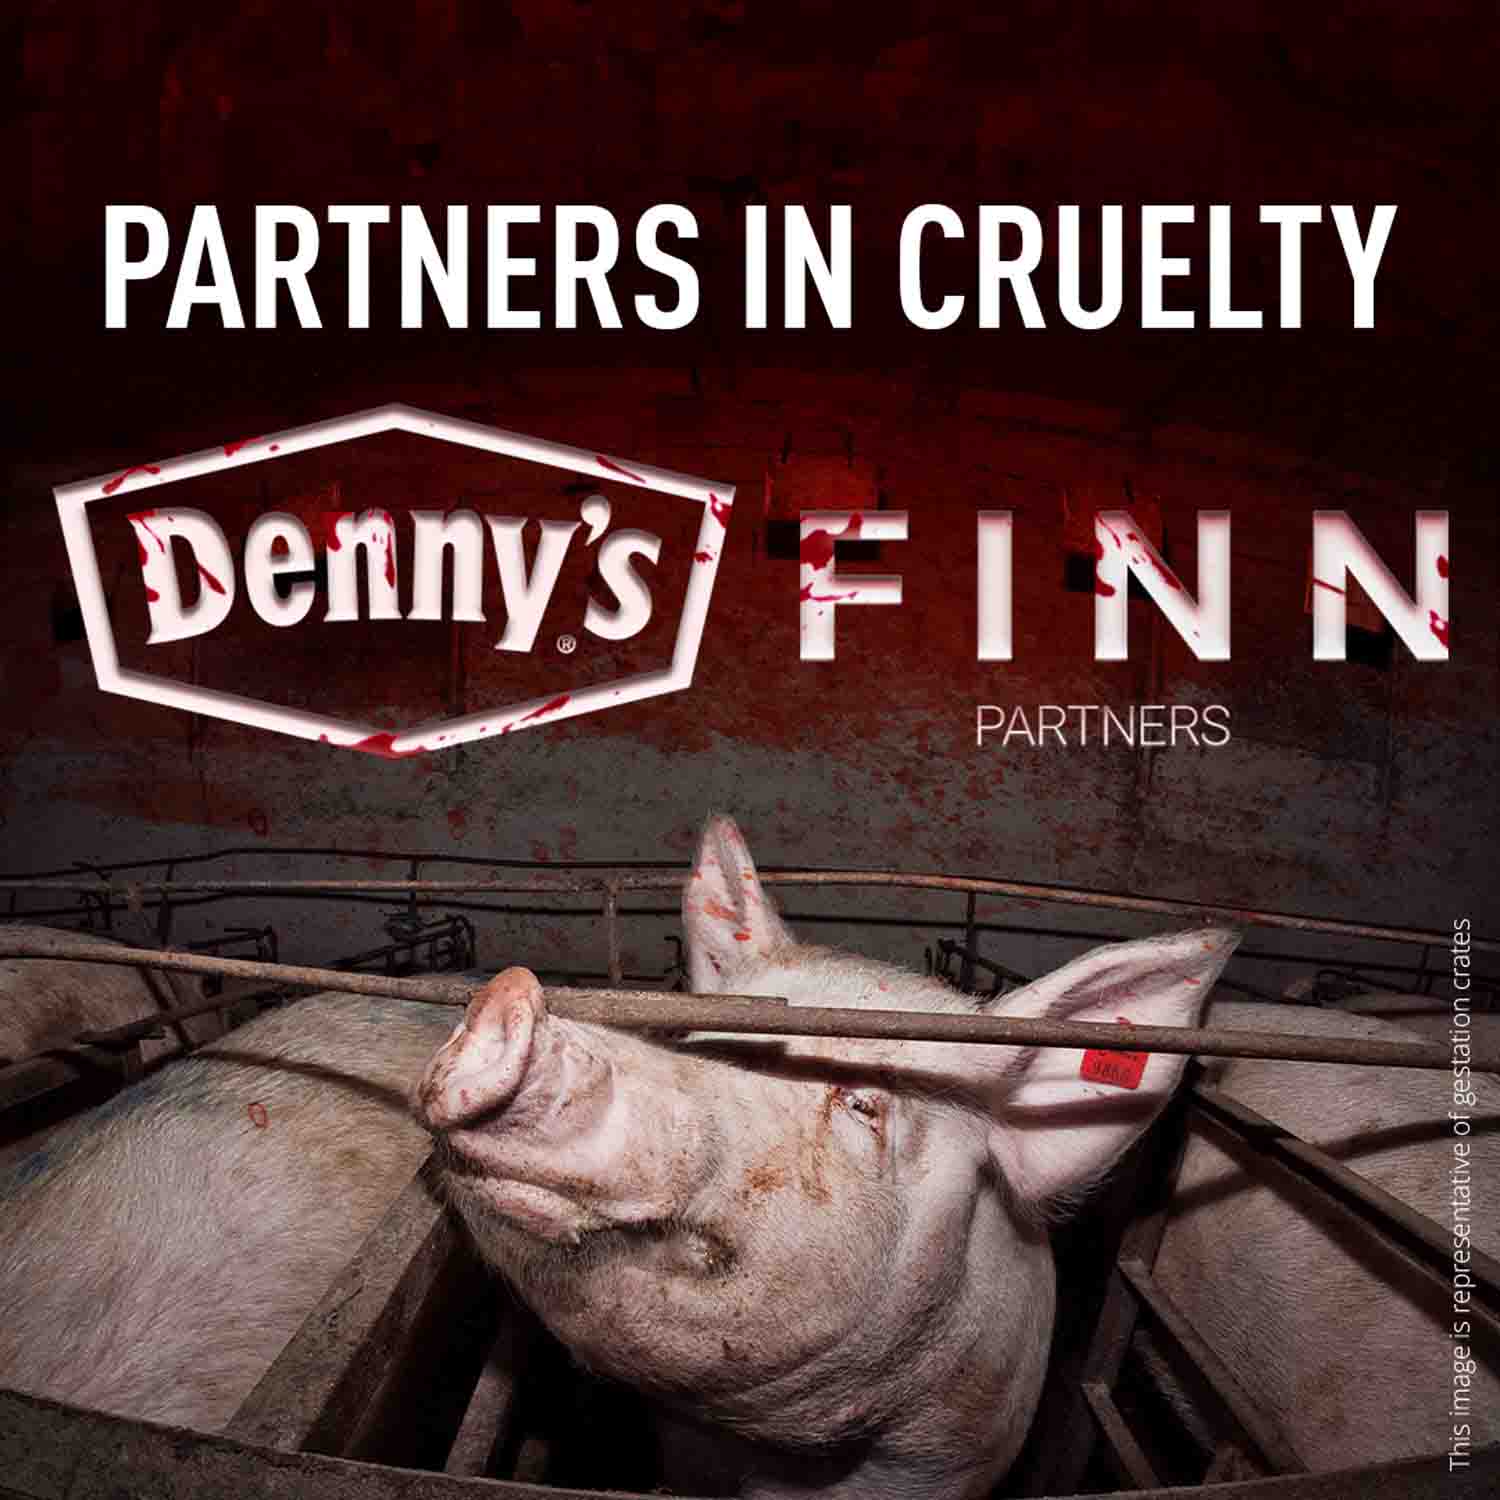 Finn Partners with Denny's